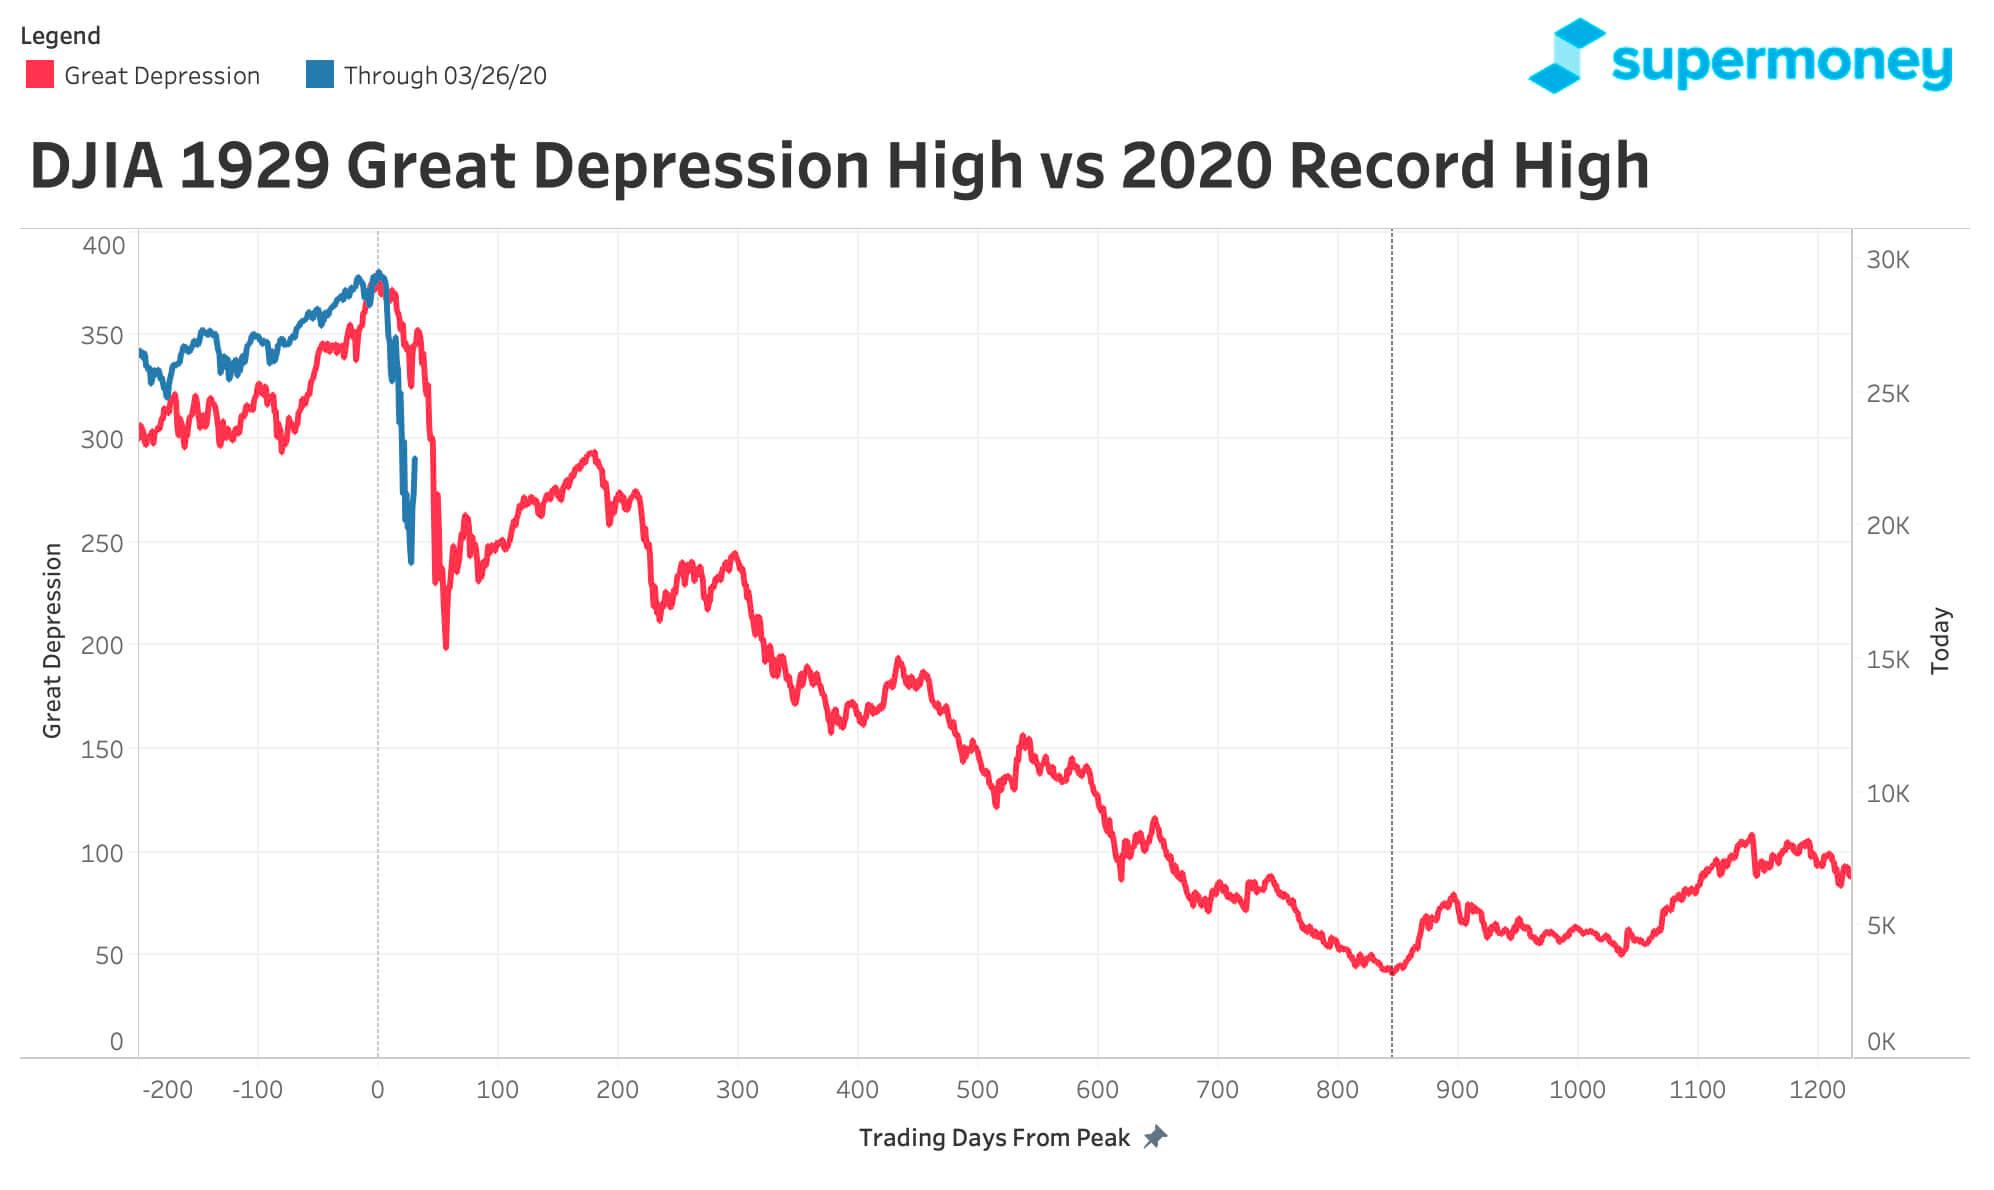 DJIA Performance Great Depression vs. Coronavirus Crisis